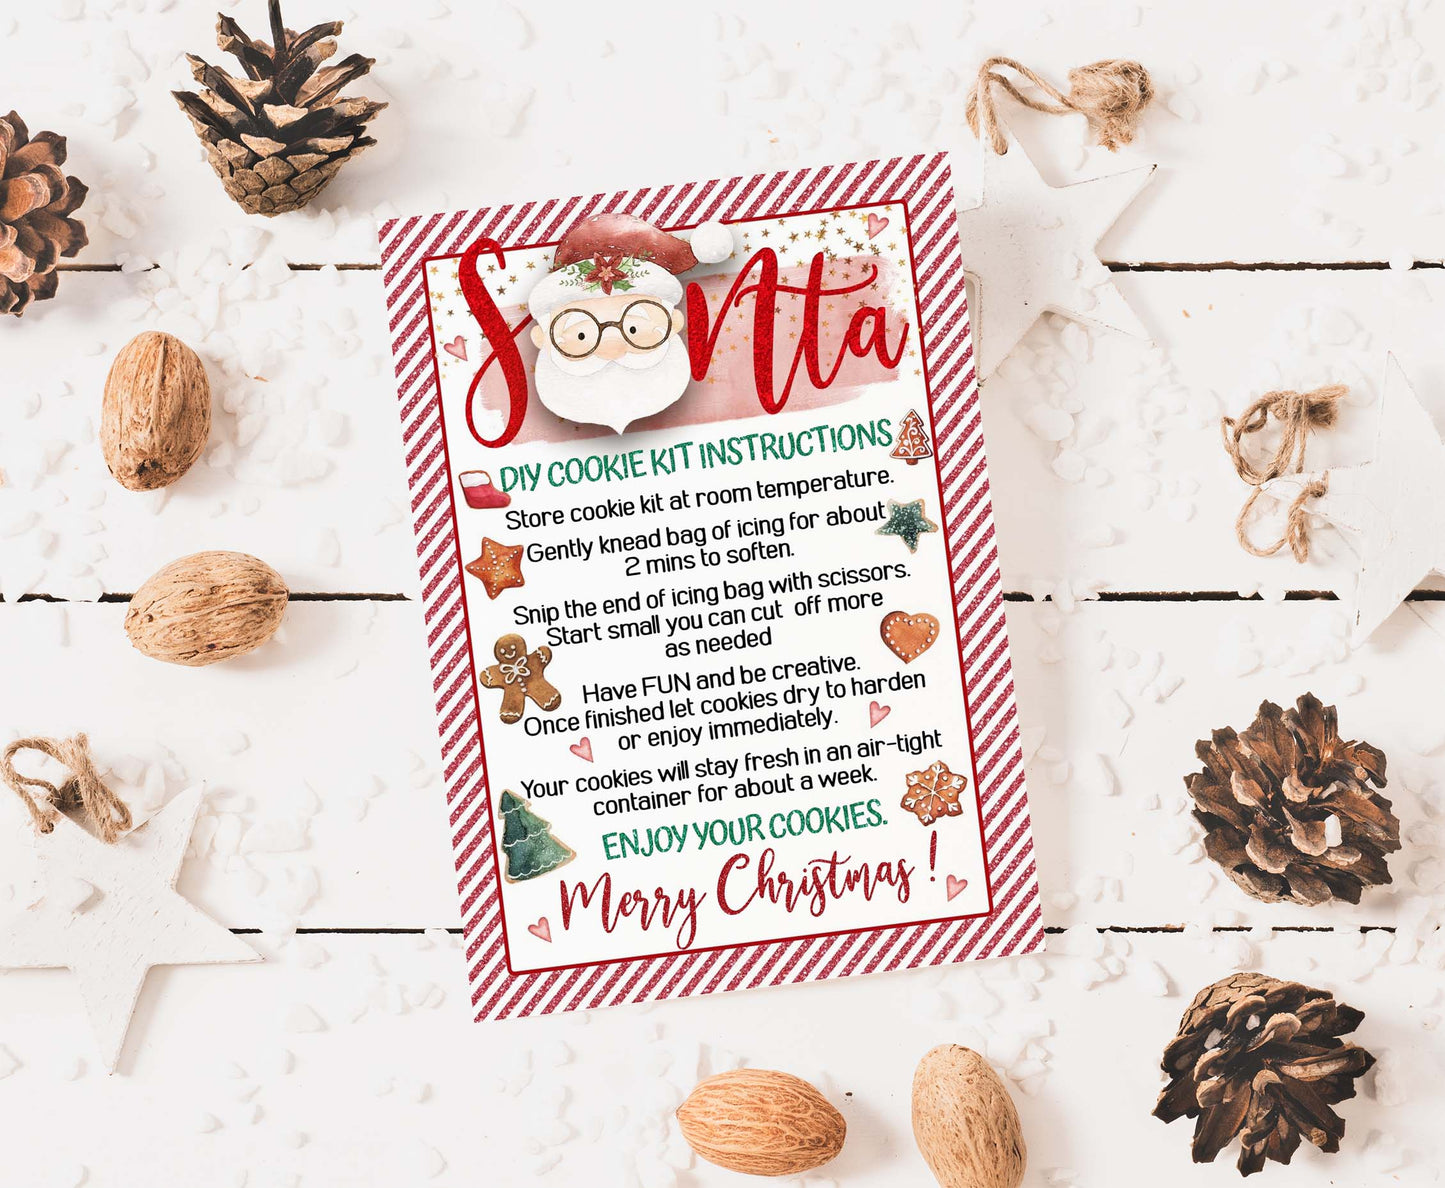 Editable Santa DIY Cookie Kit Instructions Card | Christmas Printable Cards - 112